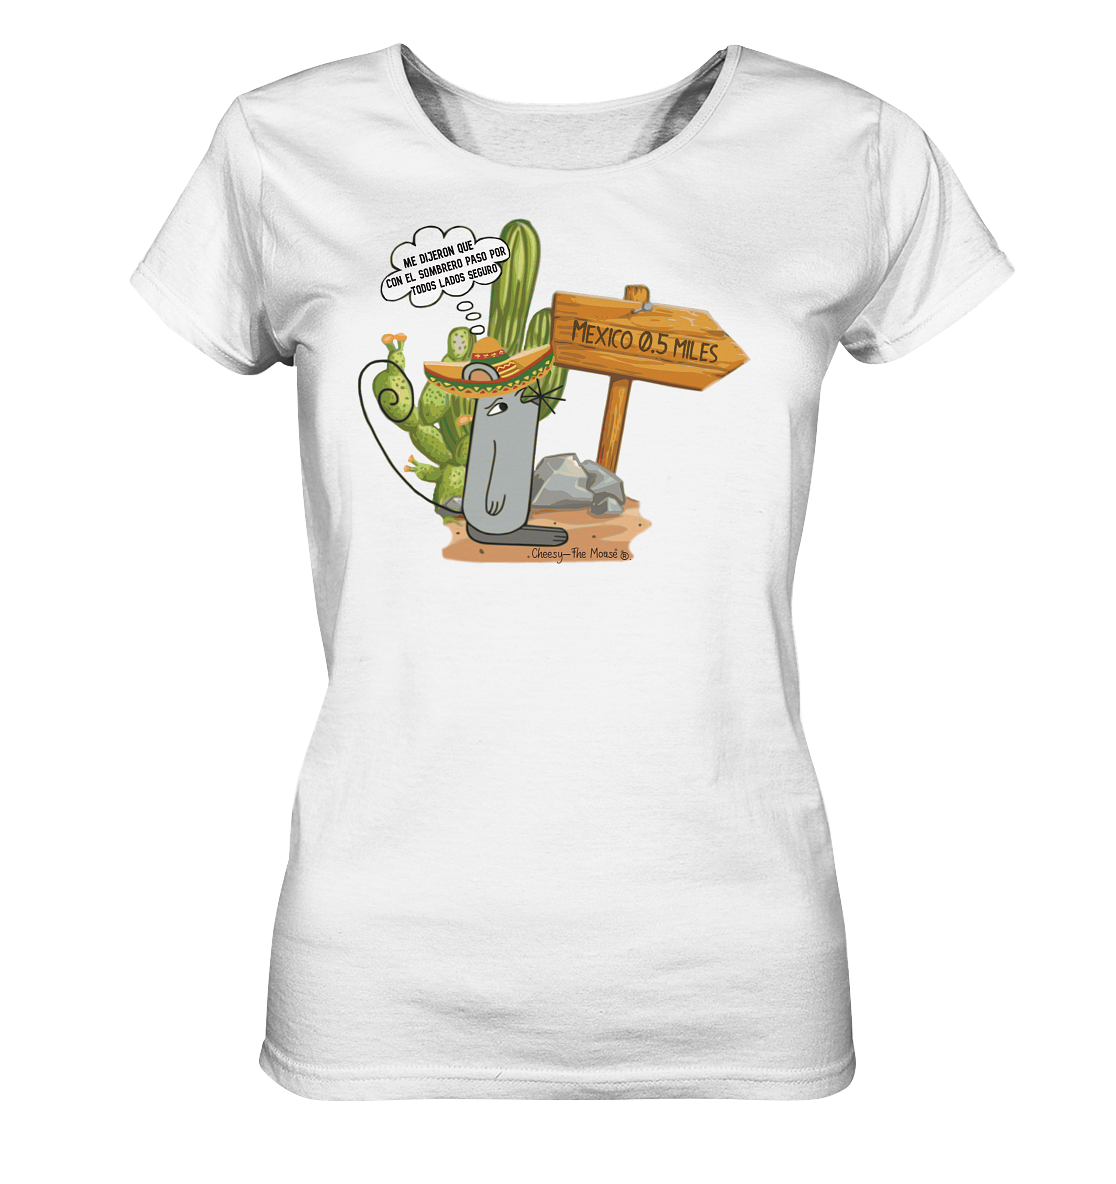 Cheesy -The Mouse® viva la Mexico - Ladies Organic Shirt